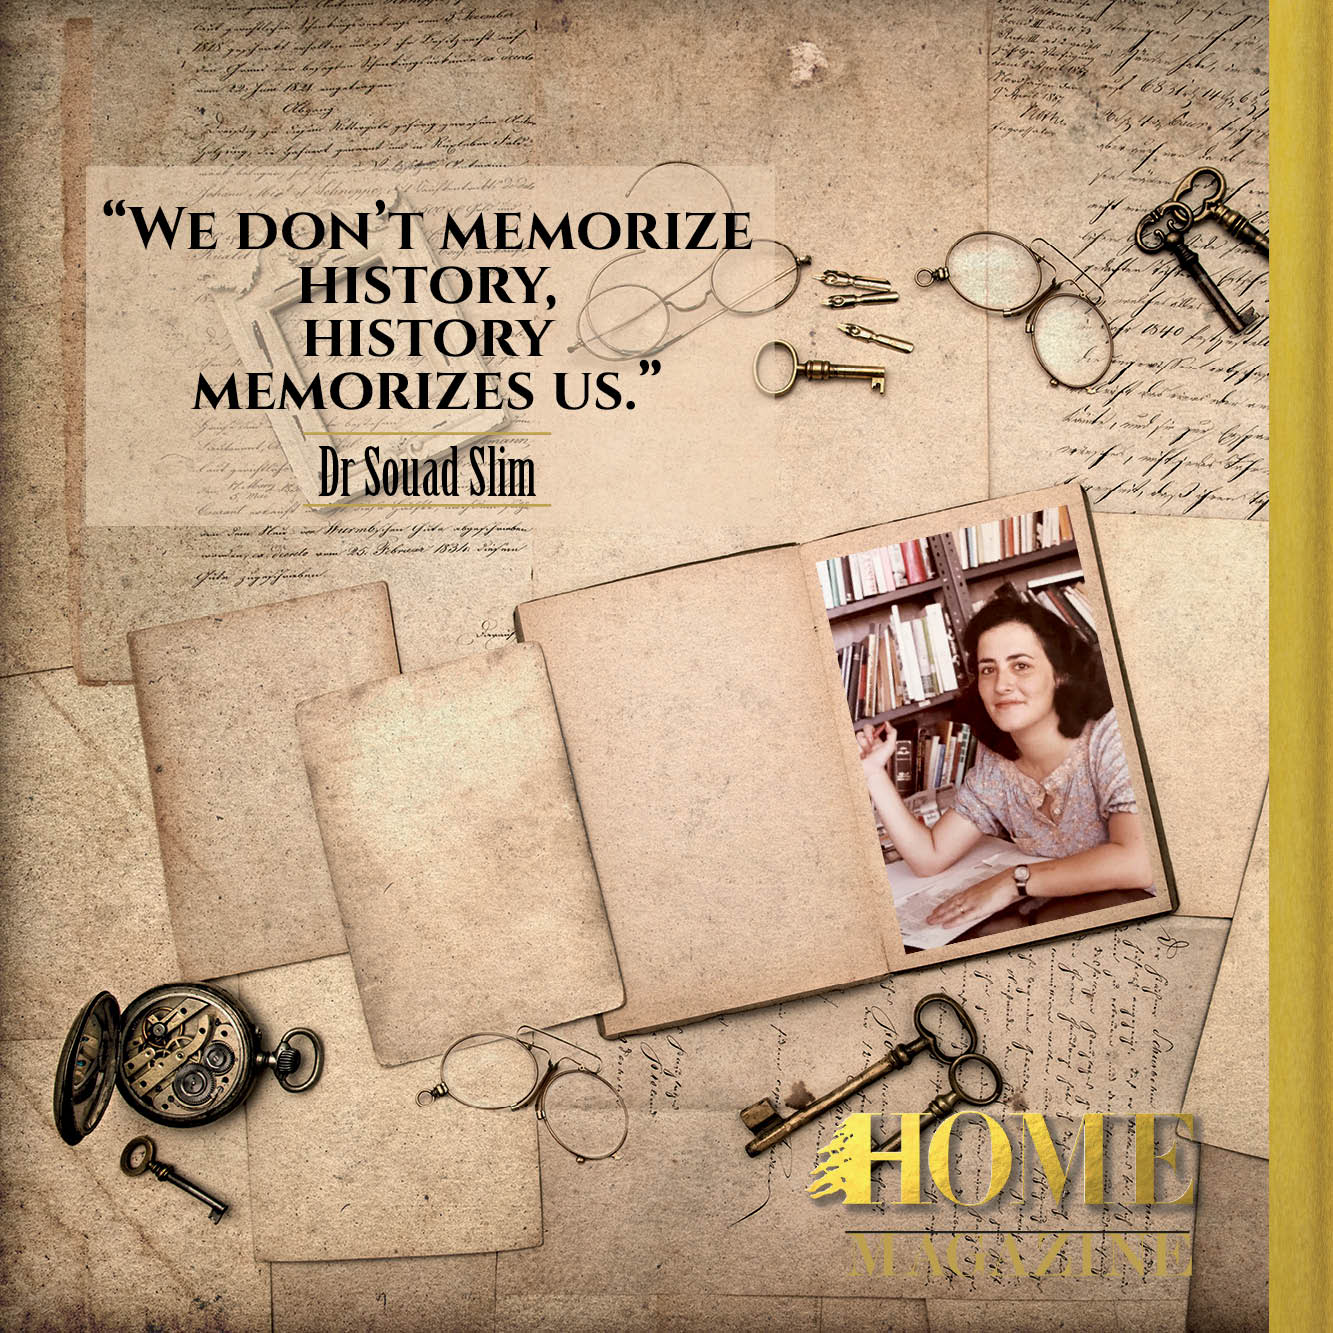 "We don't memorize history. History memorizes us"